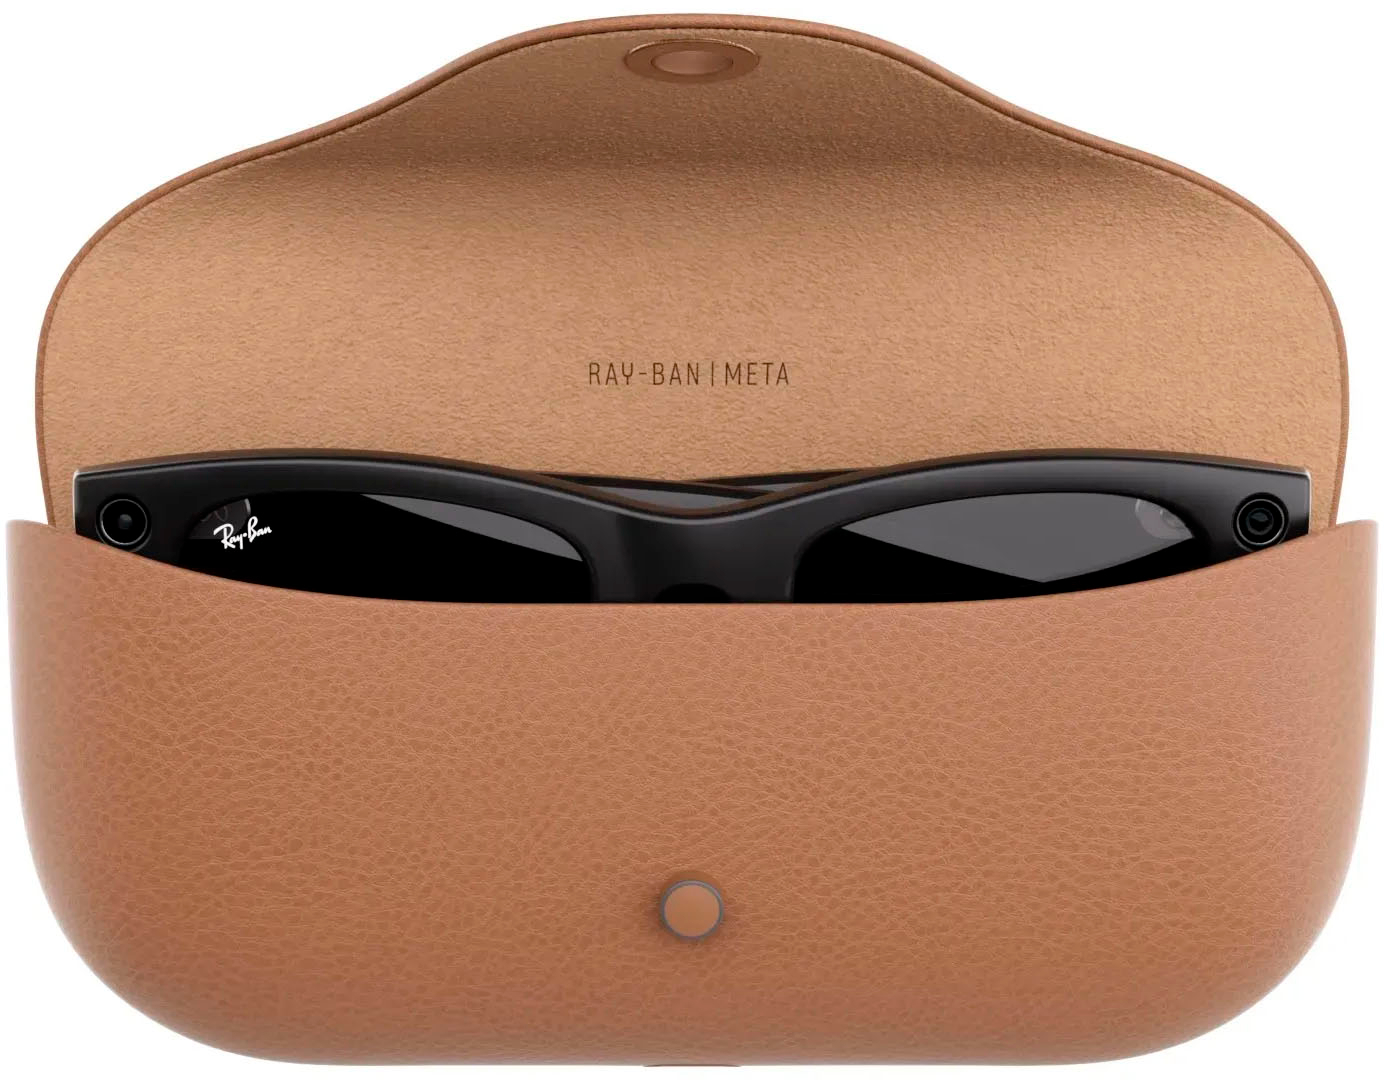 Ray-Ban Meta Wayfarer (Standard) Smart Bluetooth Audio Glasses